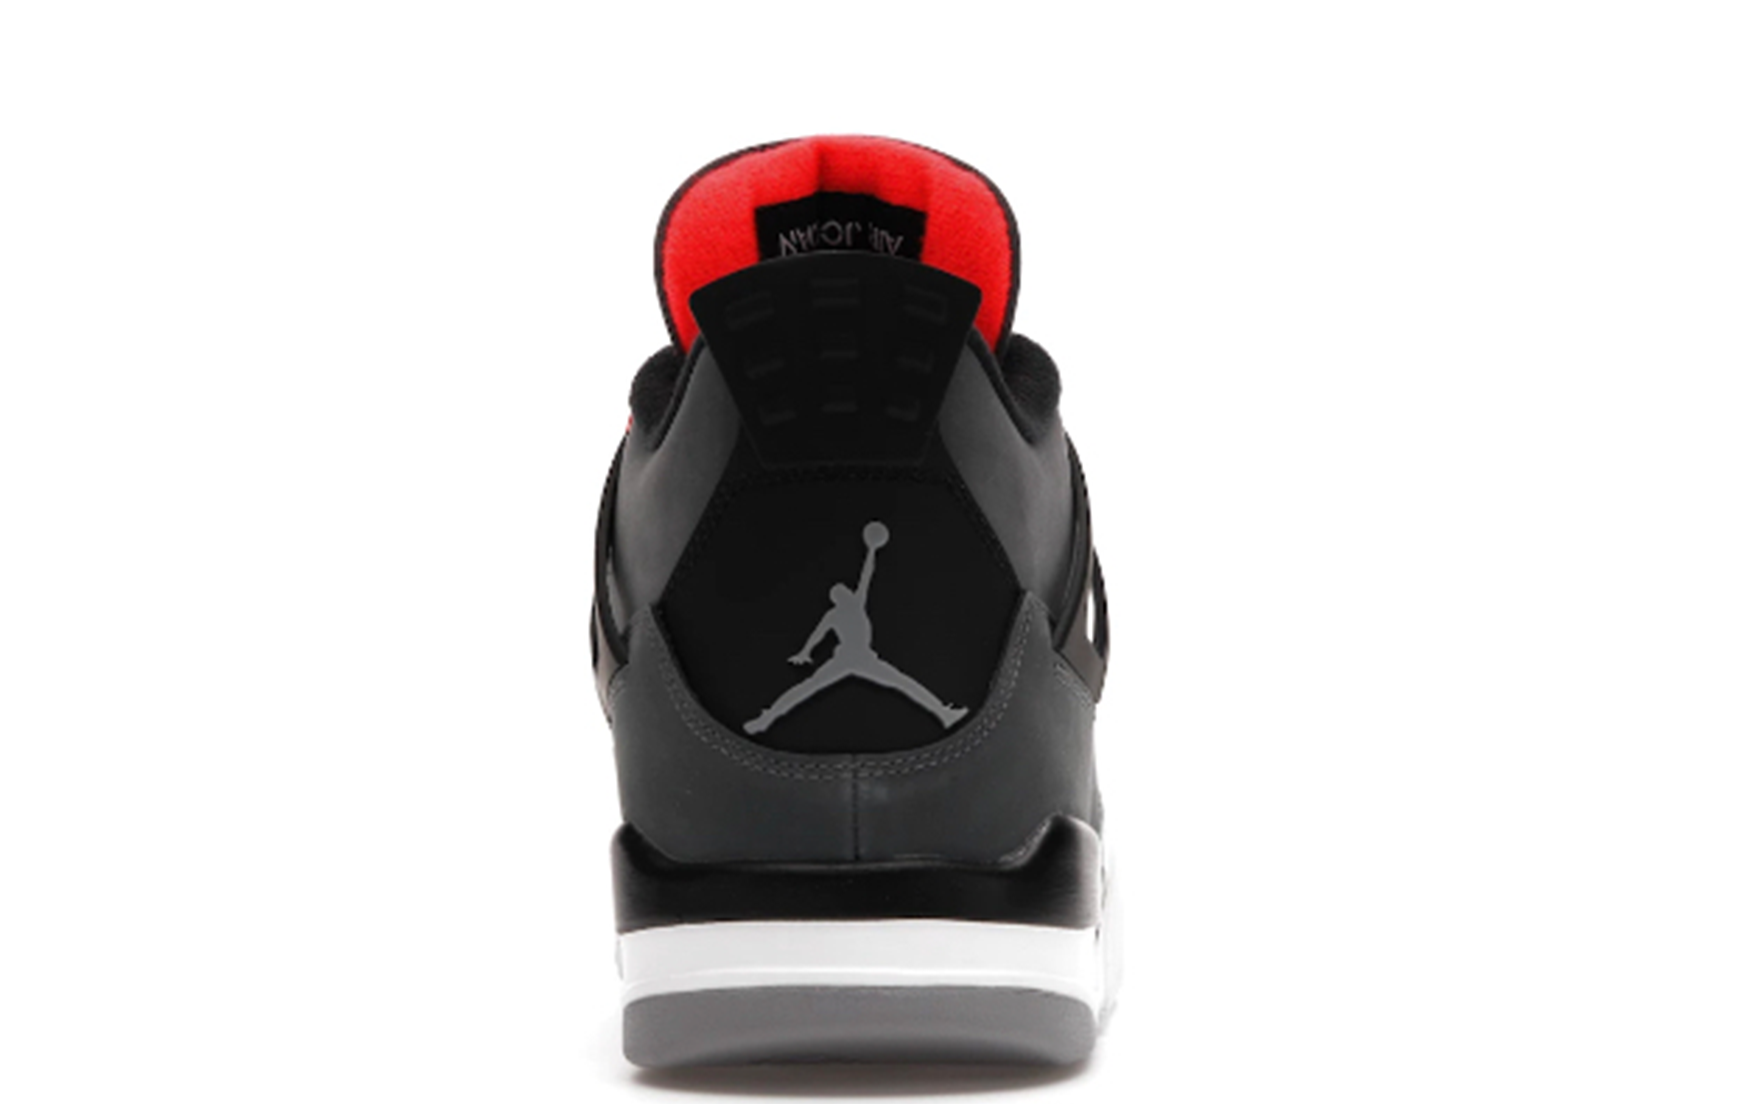 Nike Jordan 4 Retro Infrared